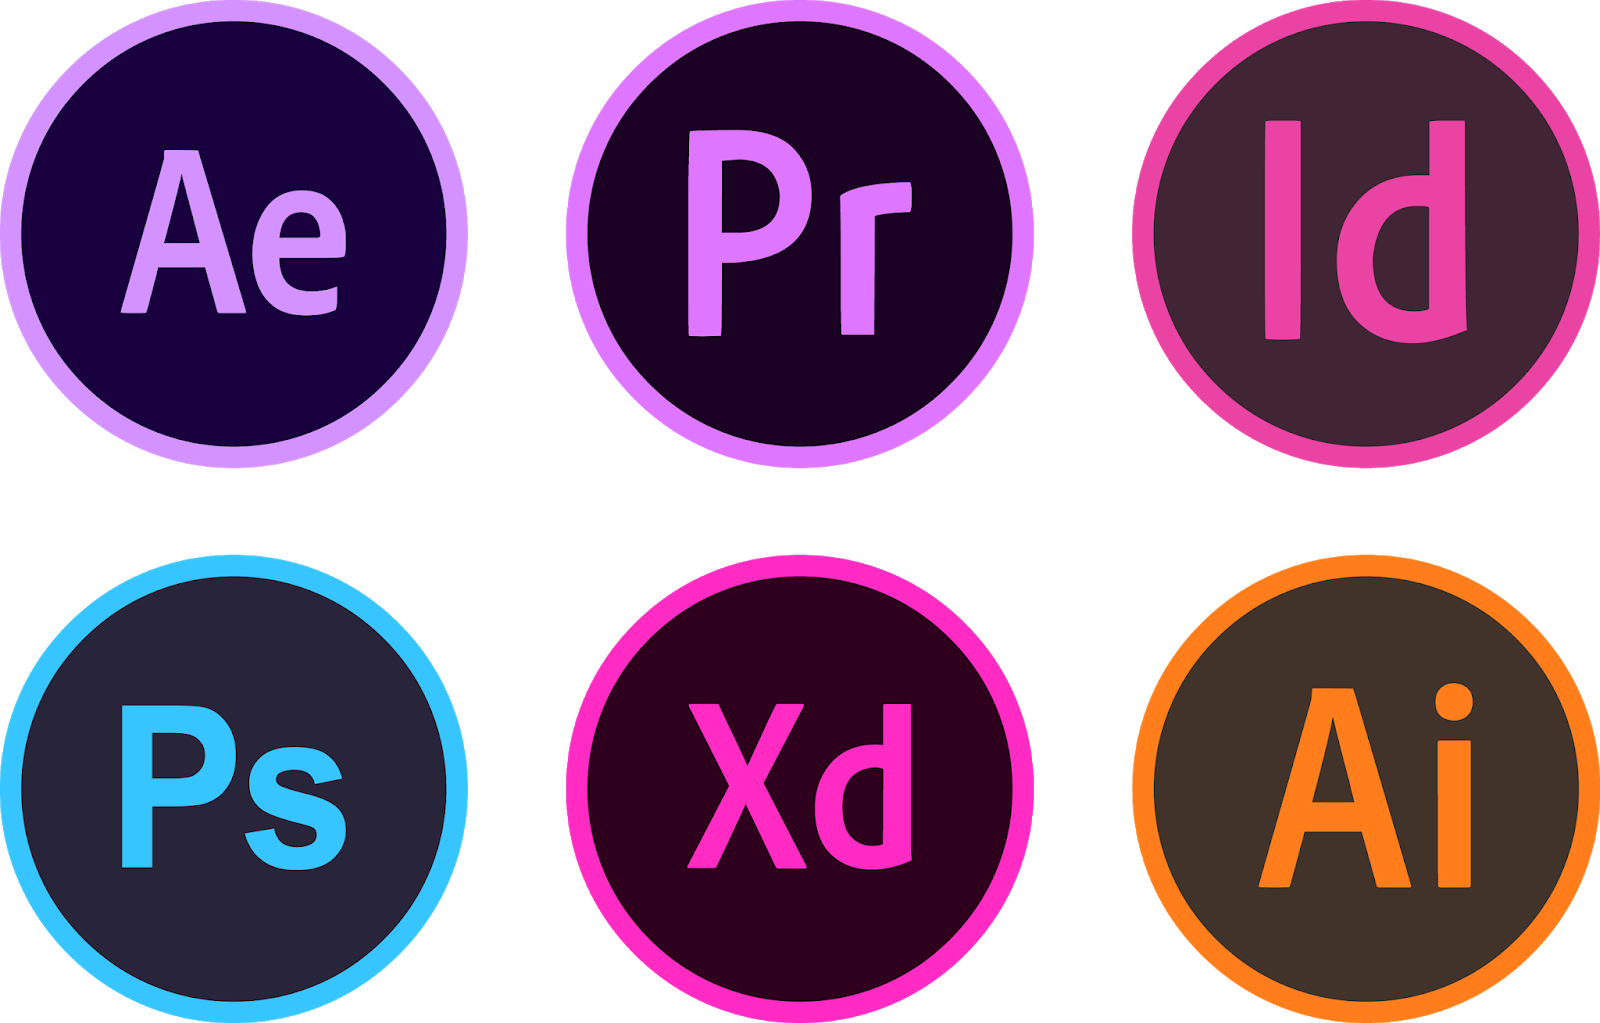 Download Icons Adobe Illustrator Photoshop Premiere Pro El Fonts Vectors